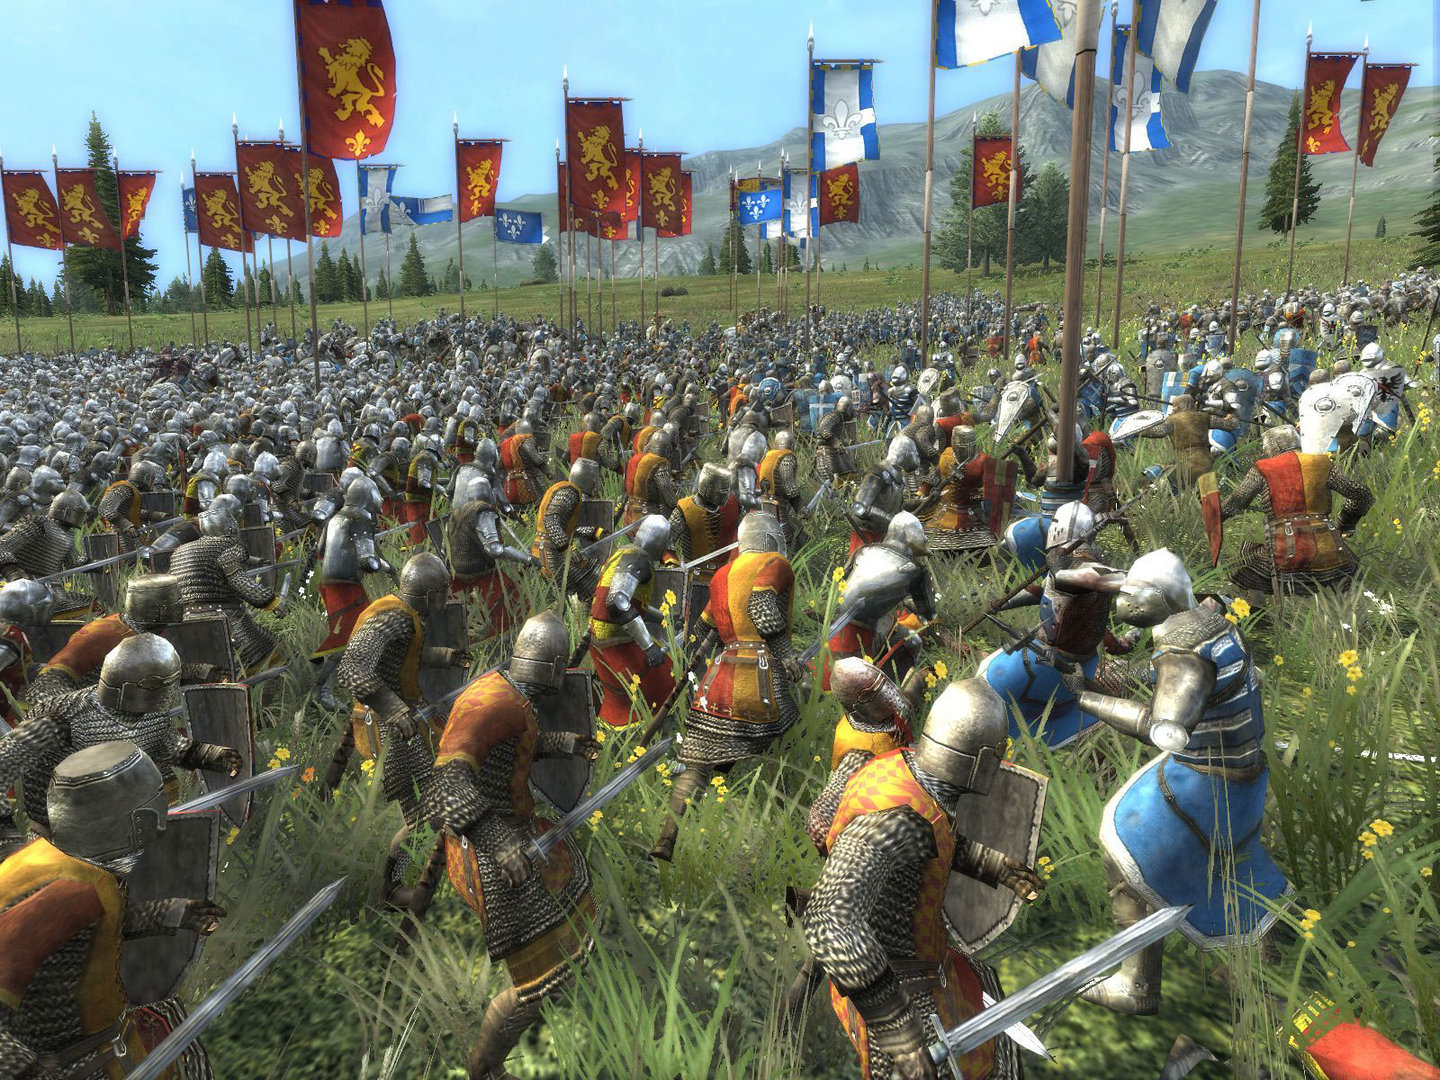 download medieval 2 total war full game free